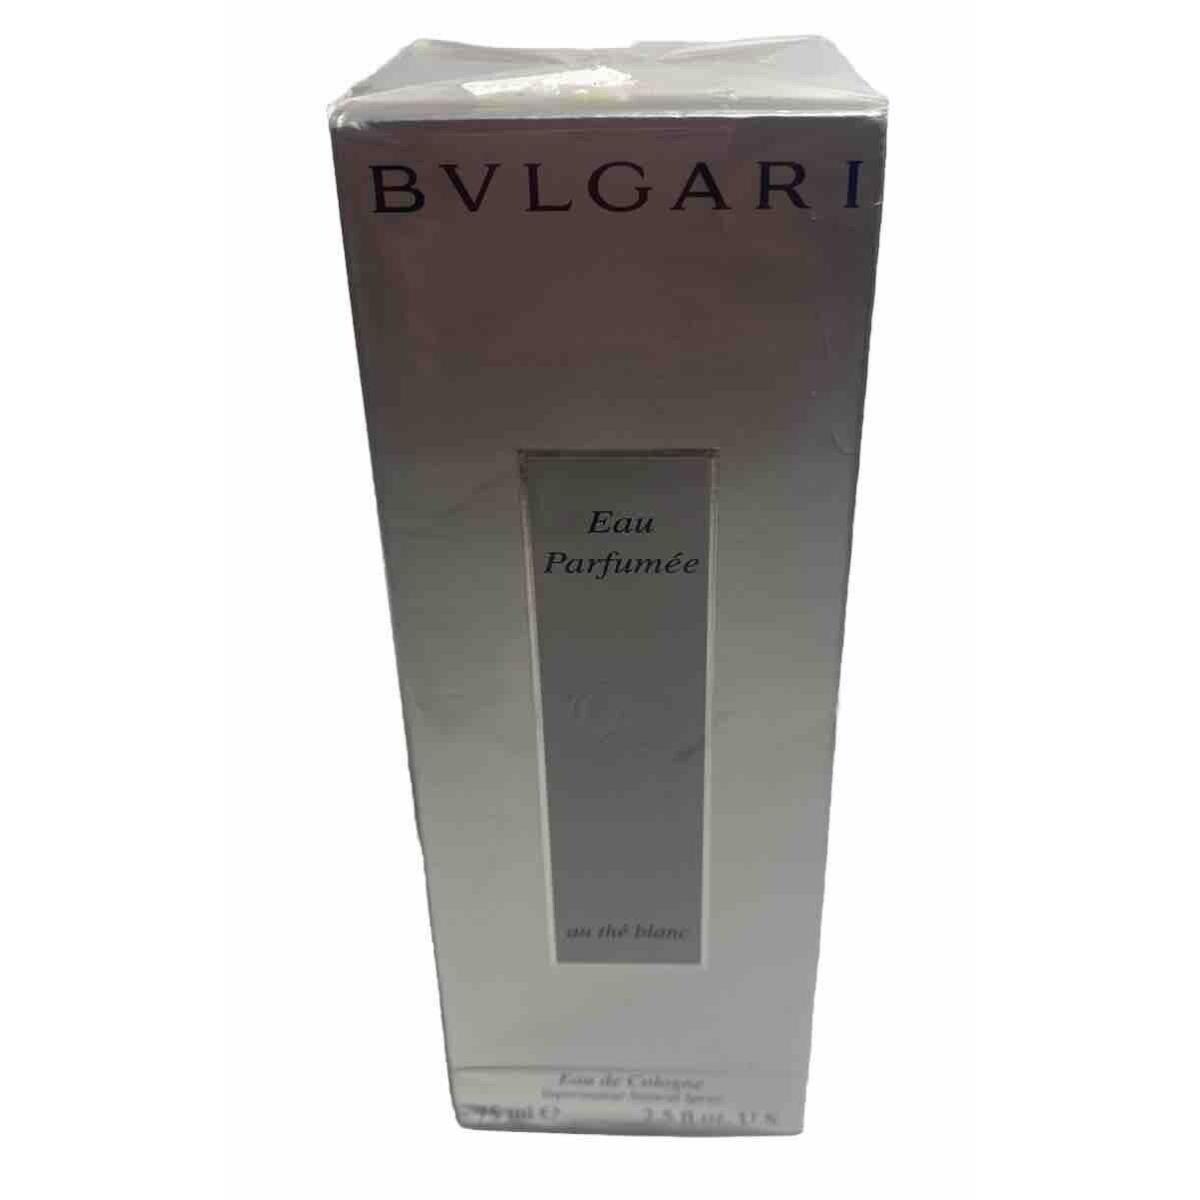 Bvlgari Eau Parfumee Au The Blanc Perfume 2.5oz Eau de Cologne